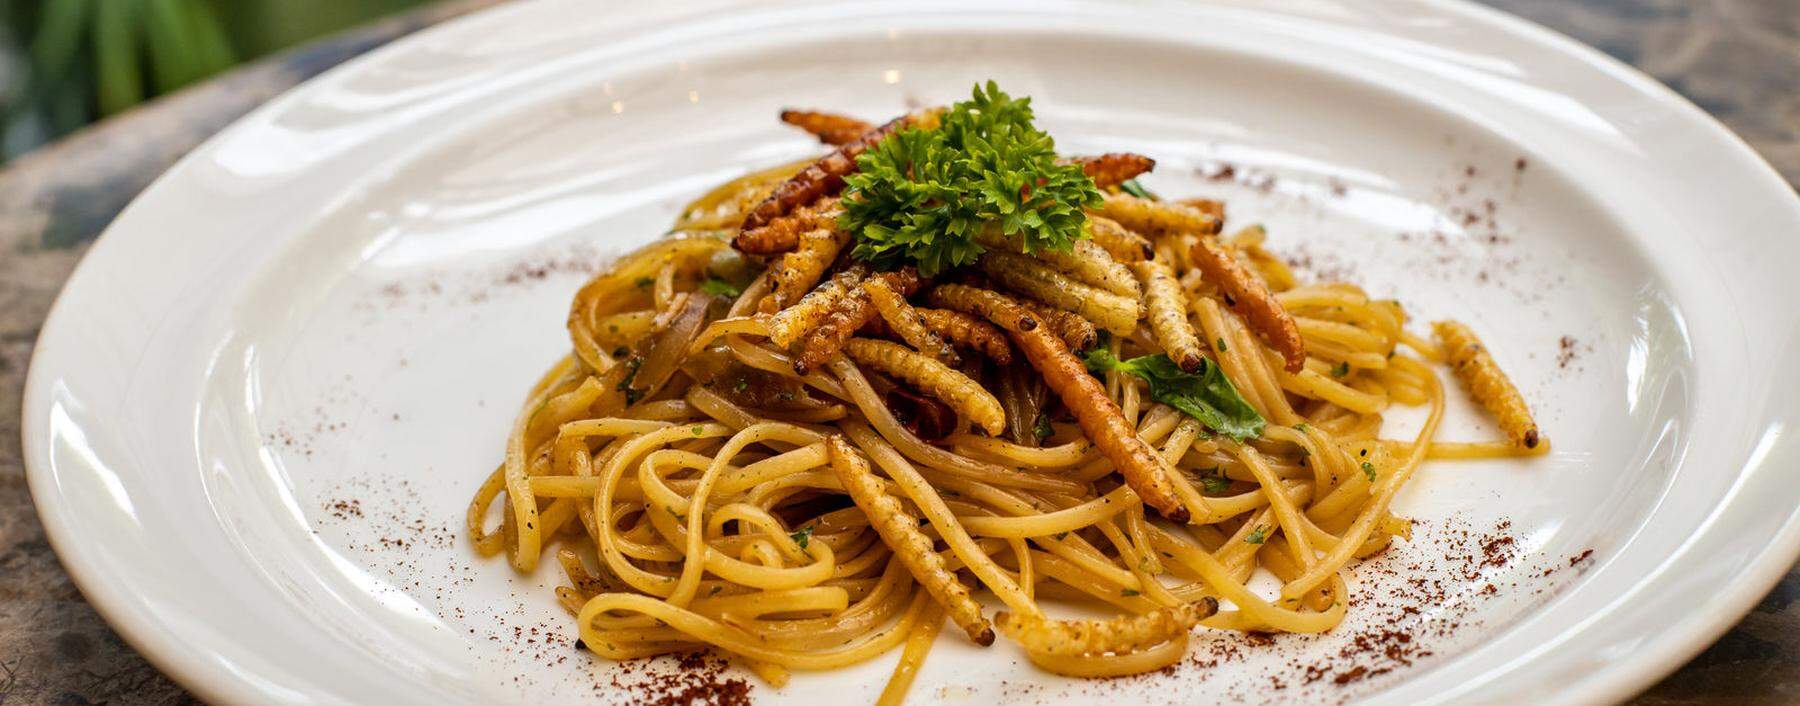 spaghetti dish prepared with larvae